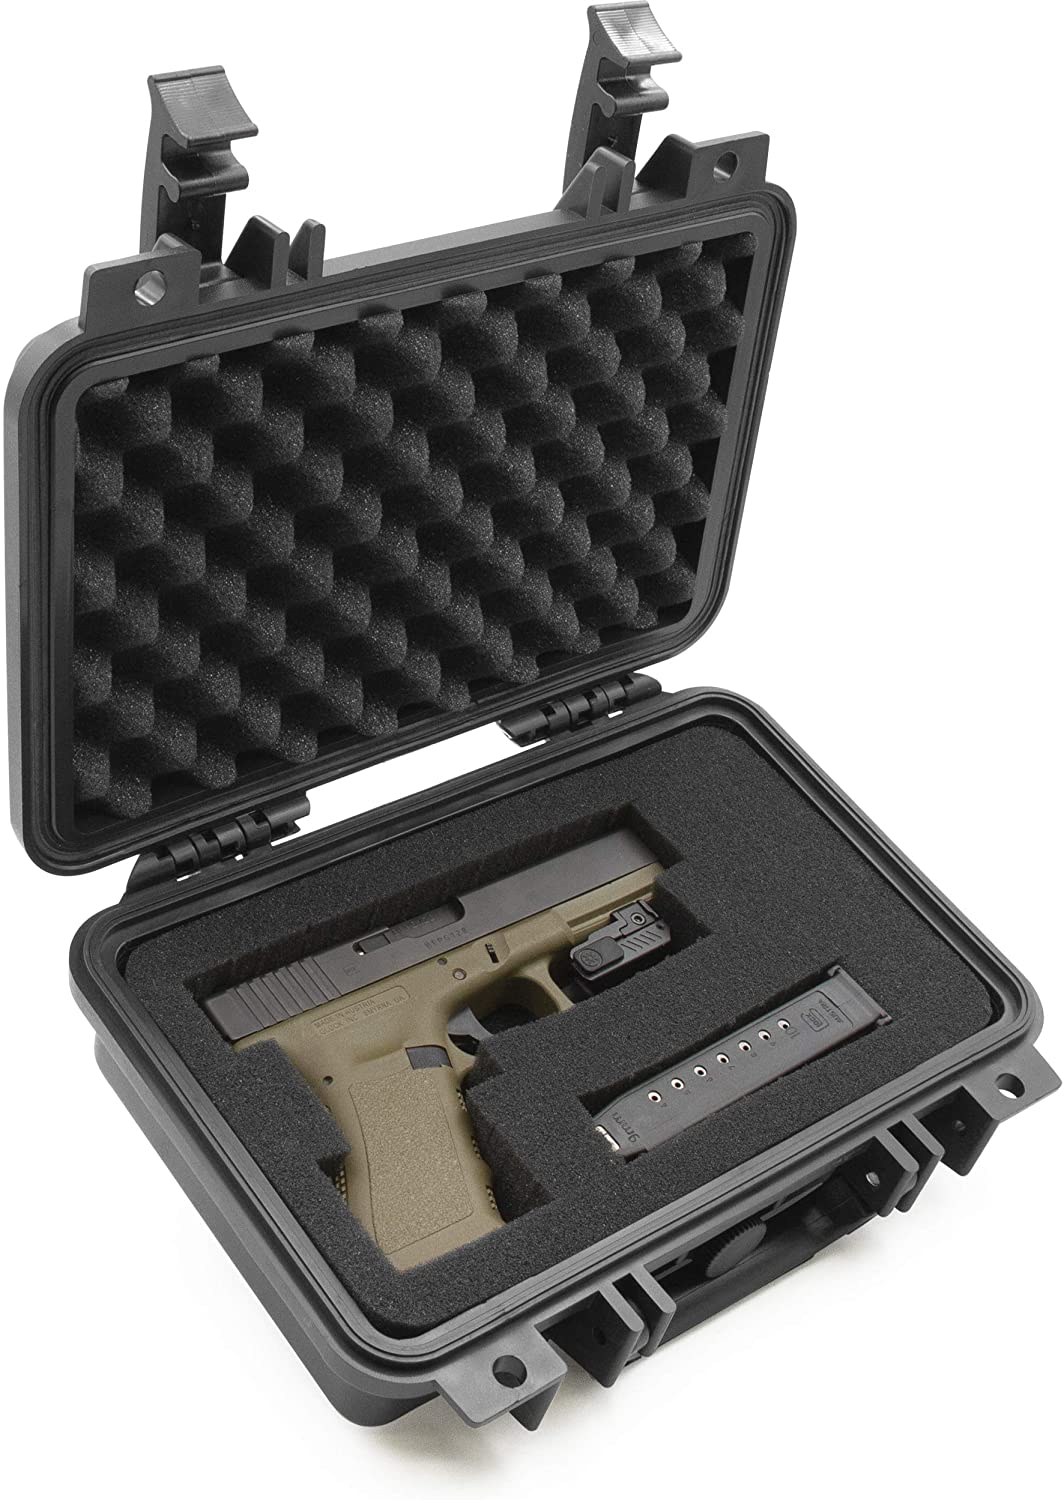 CASEMATIX 12 Hard Gun Case for Pistols - Waterproof & Shockproof Gun Cases  for Pistols, Compact 9mm Gun Case for Carrying Handgun and Accessories